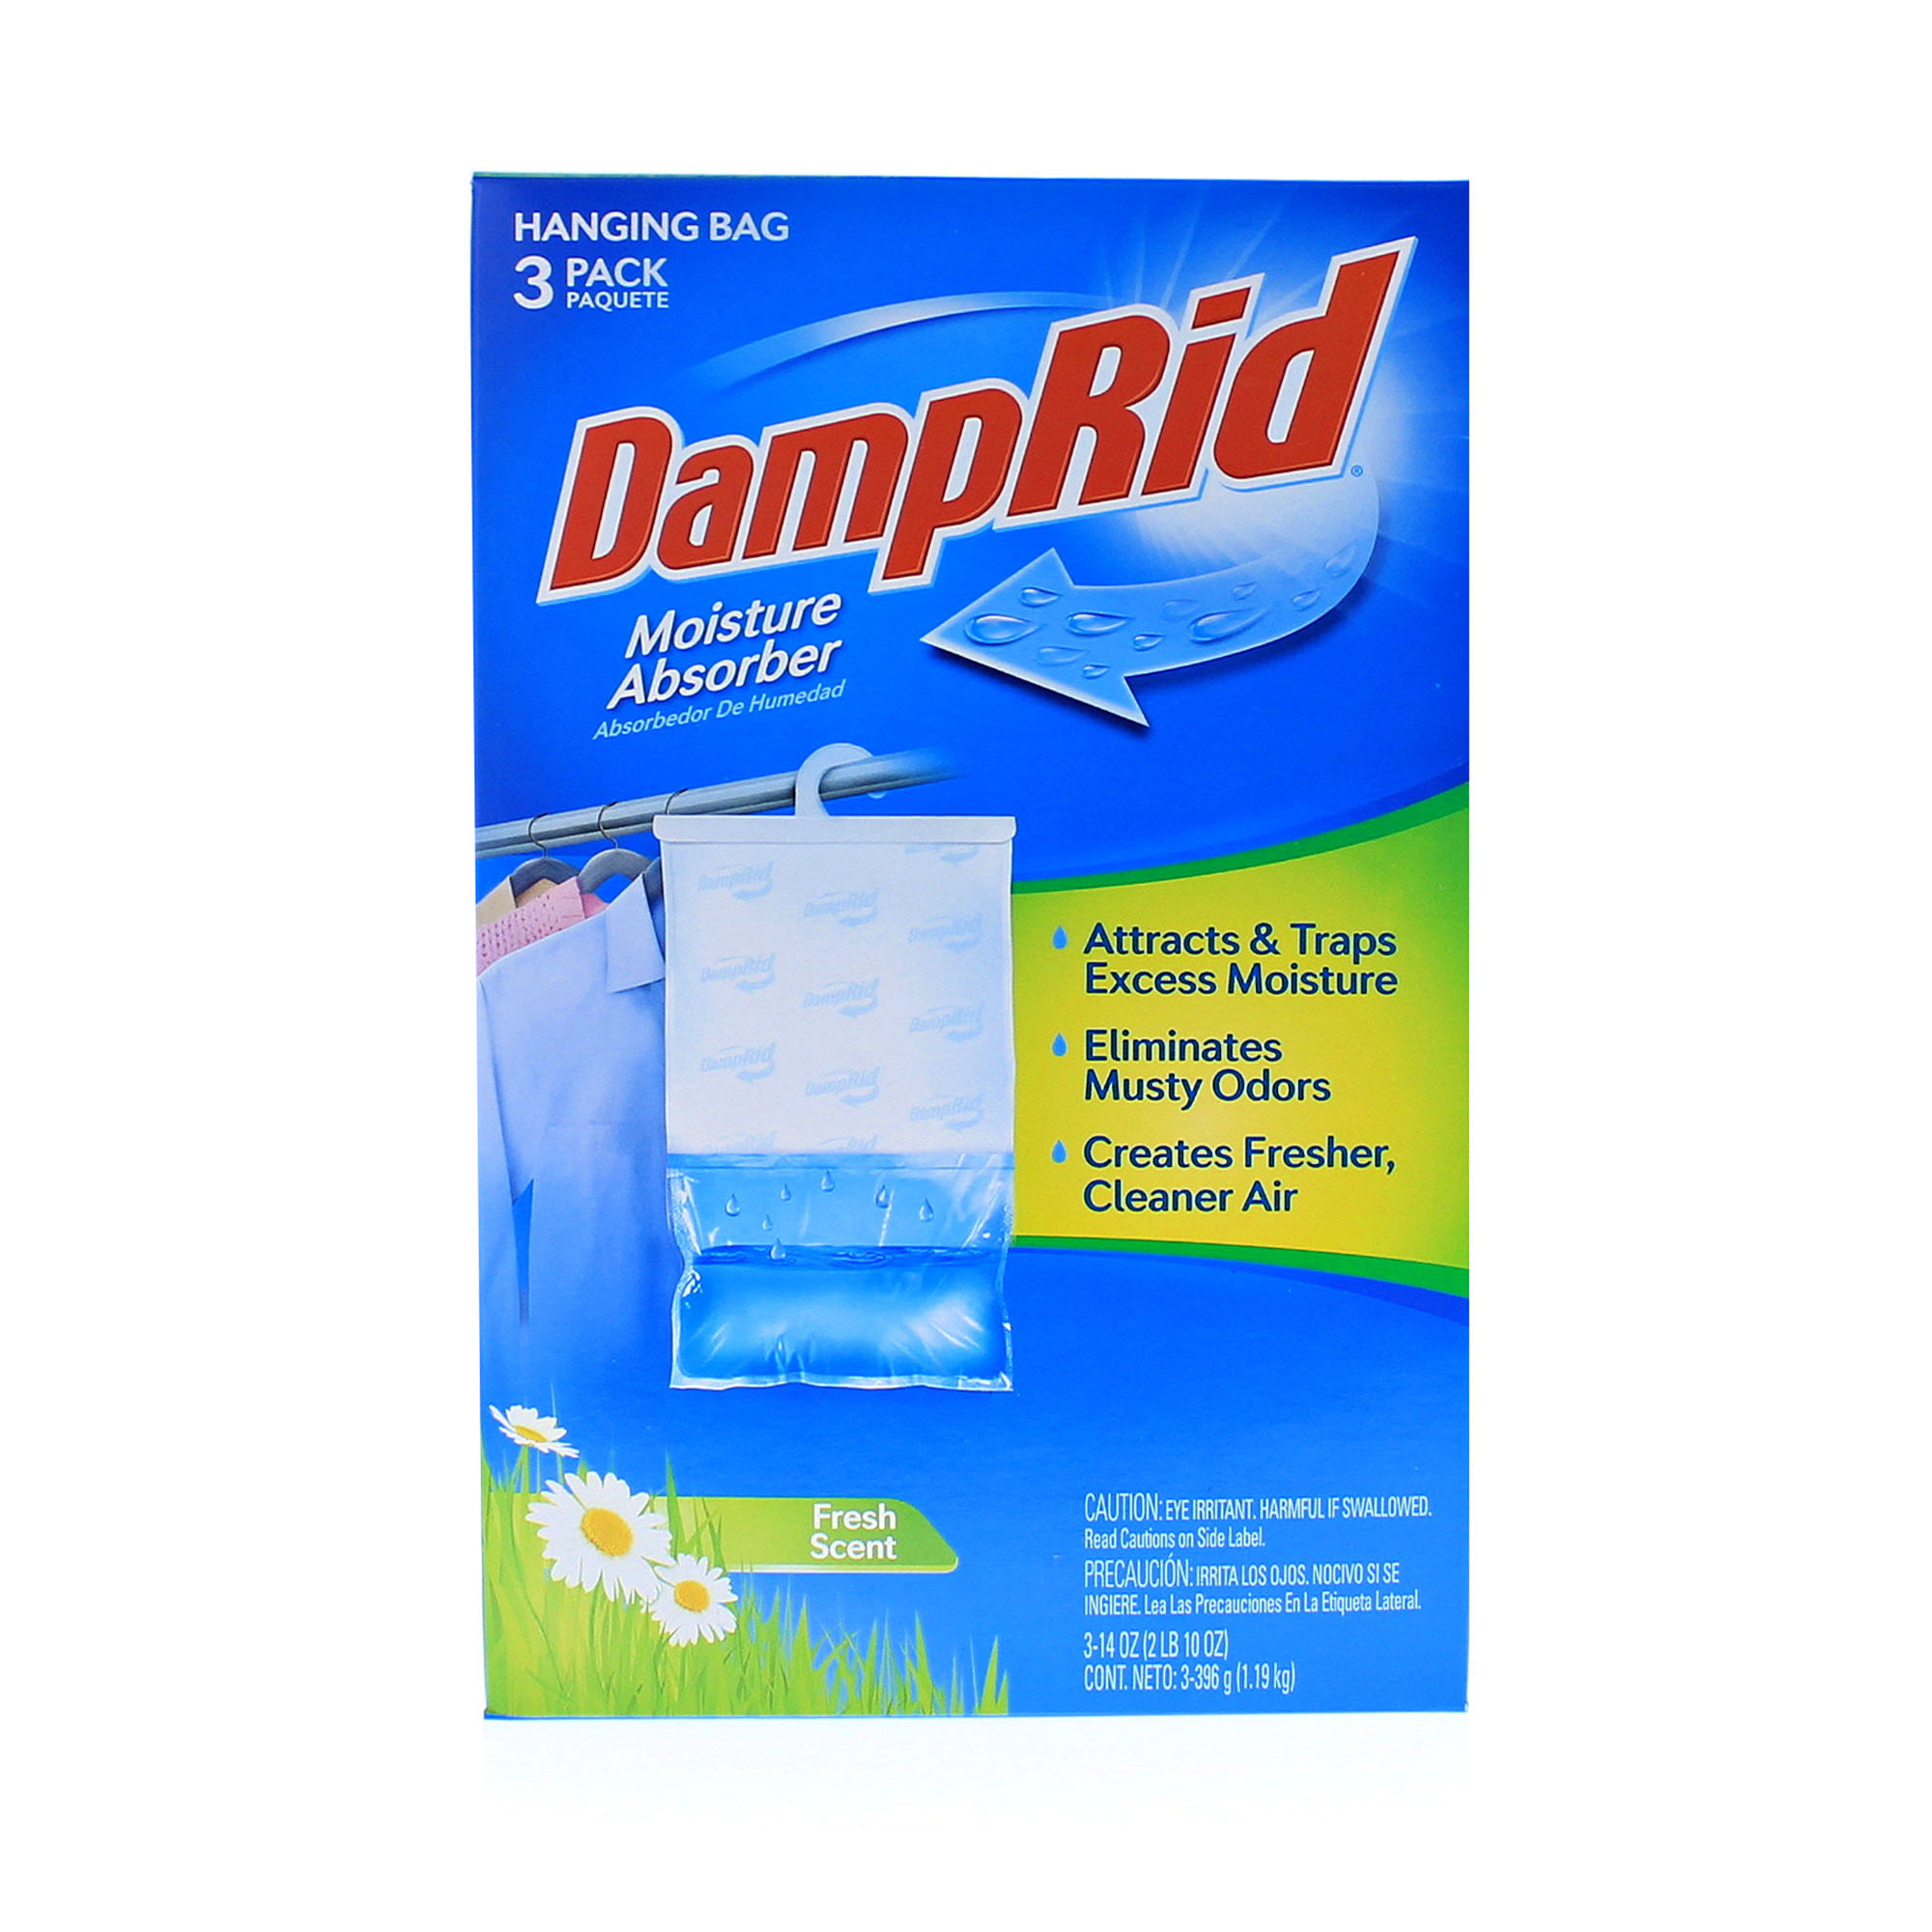 DampRid Fresh Scent Hanging Moisture Absorber, 3 Pack - image 3 of 8